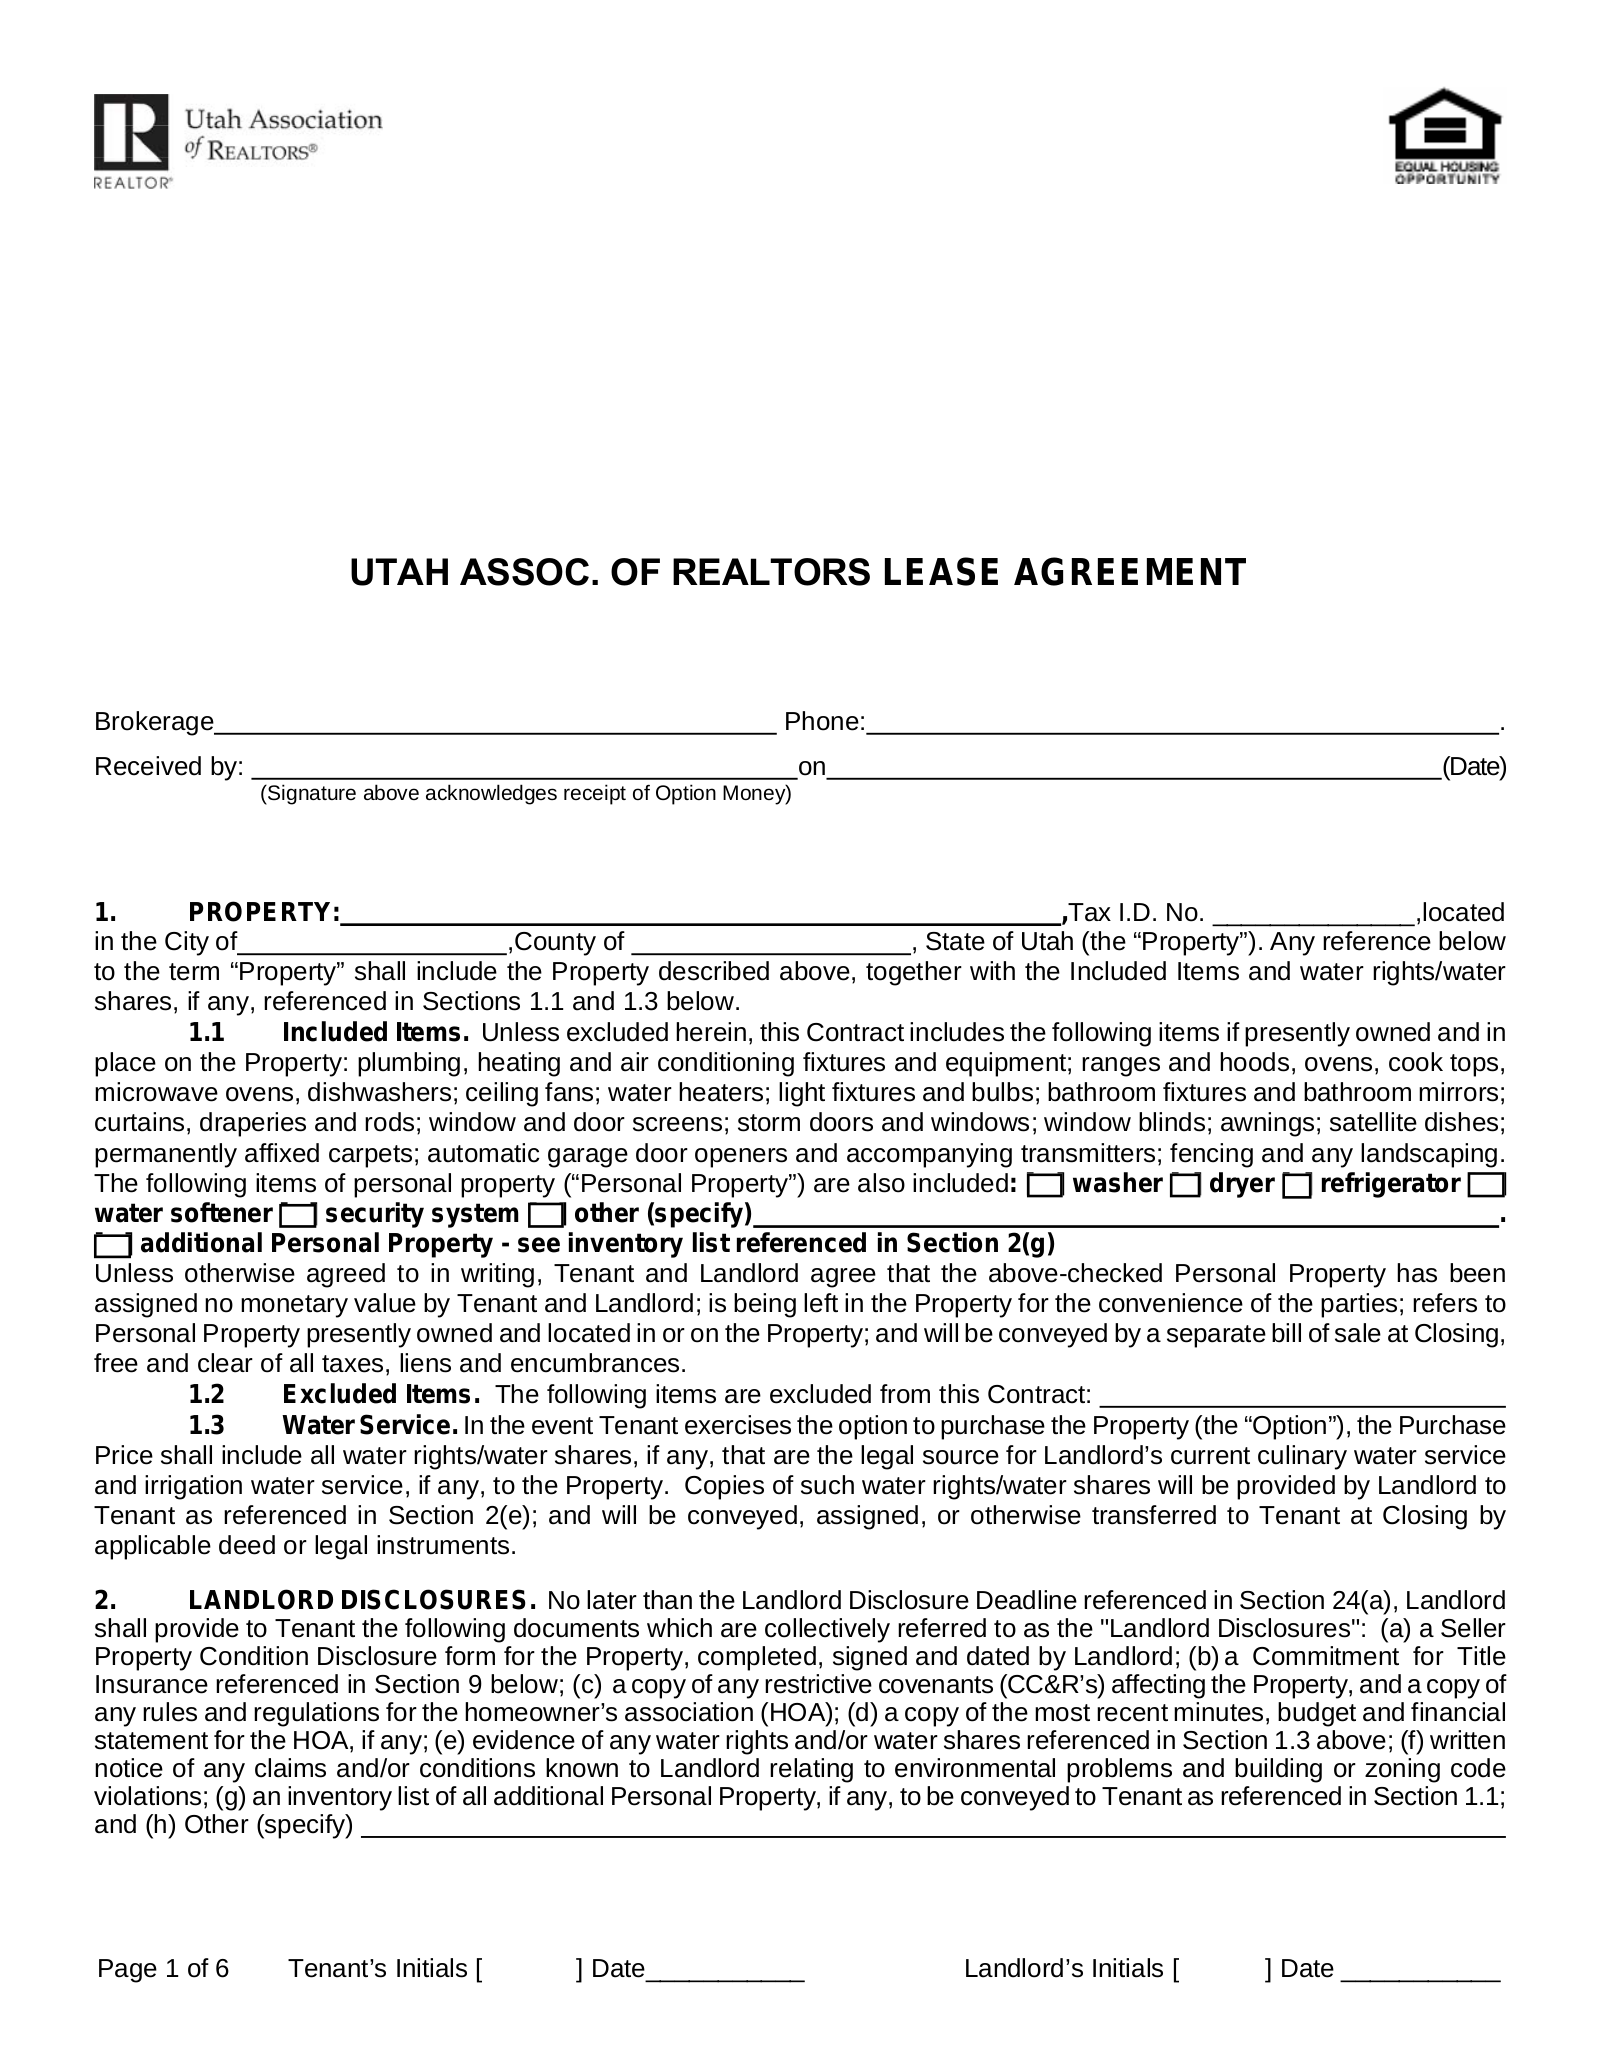 Utah Association of Realtors Residential Lease Agreement